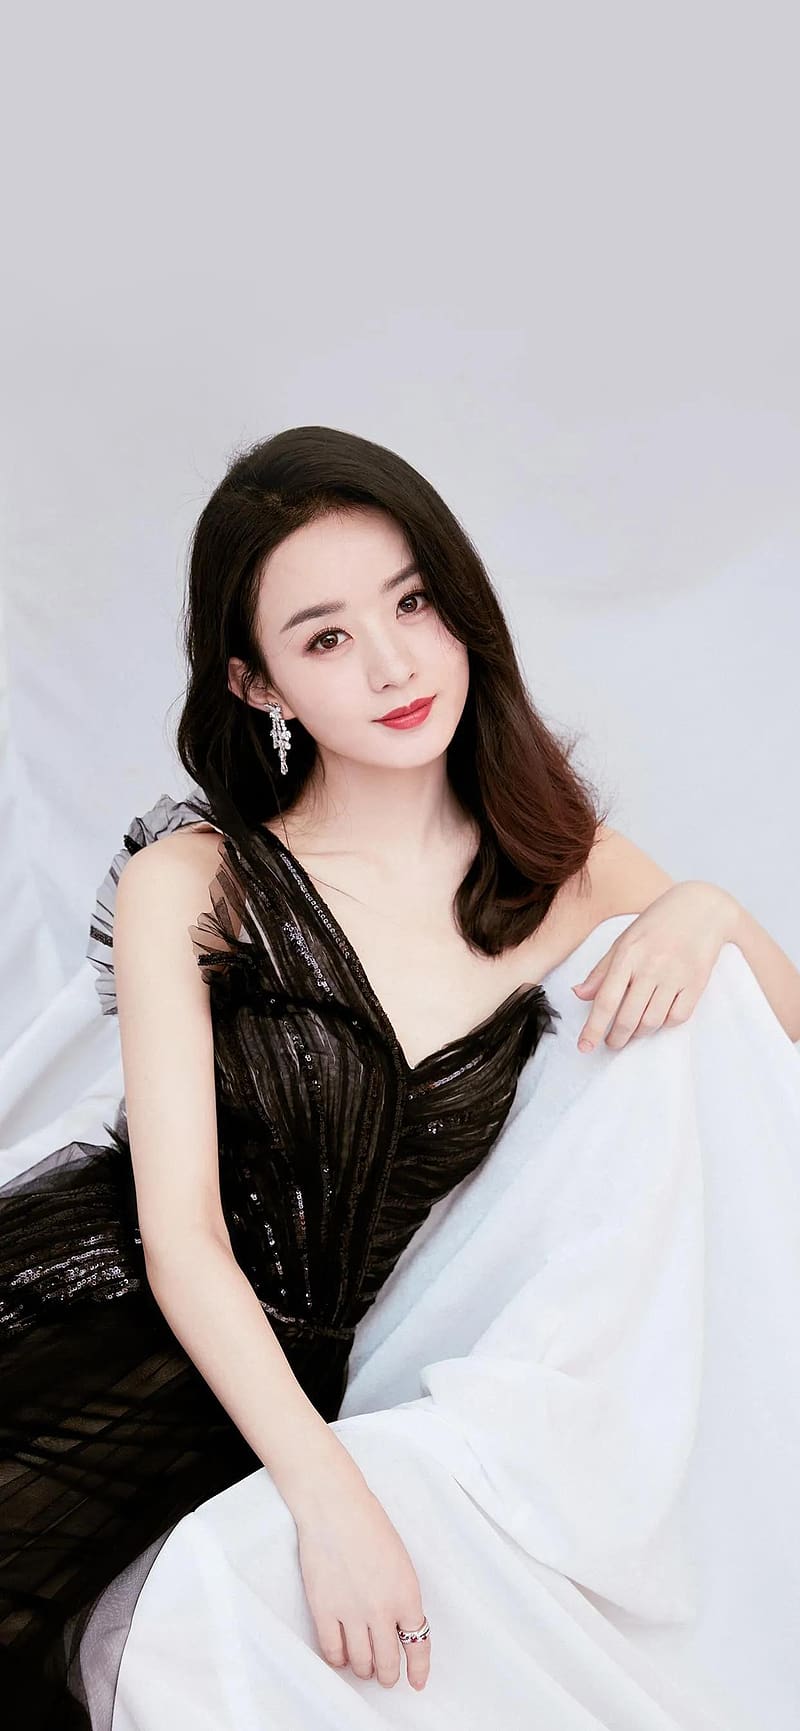 Female star series : Zhao Liying, Yang Mi and Liu Shishi, who is the ...